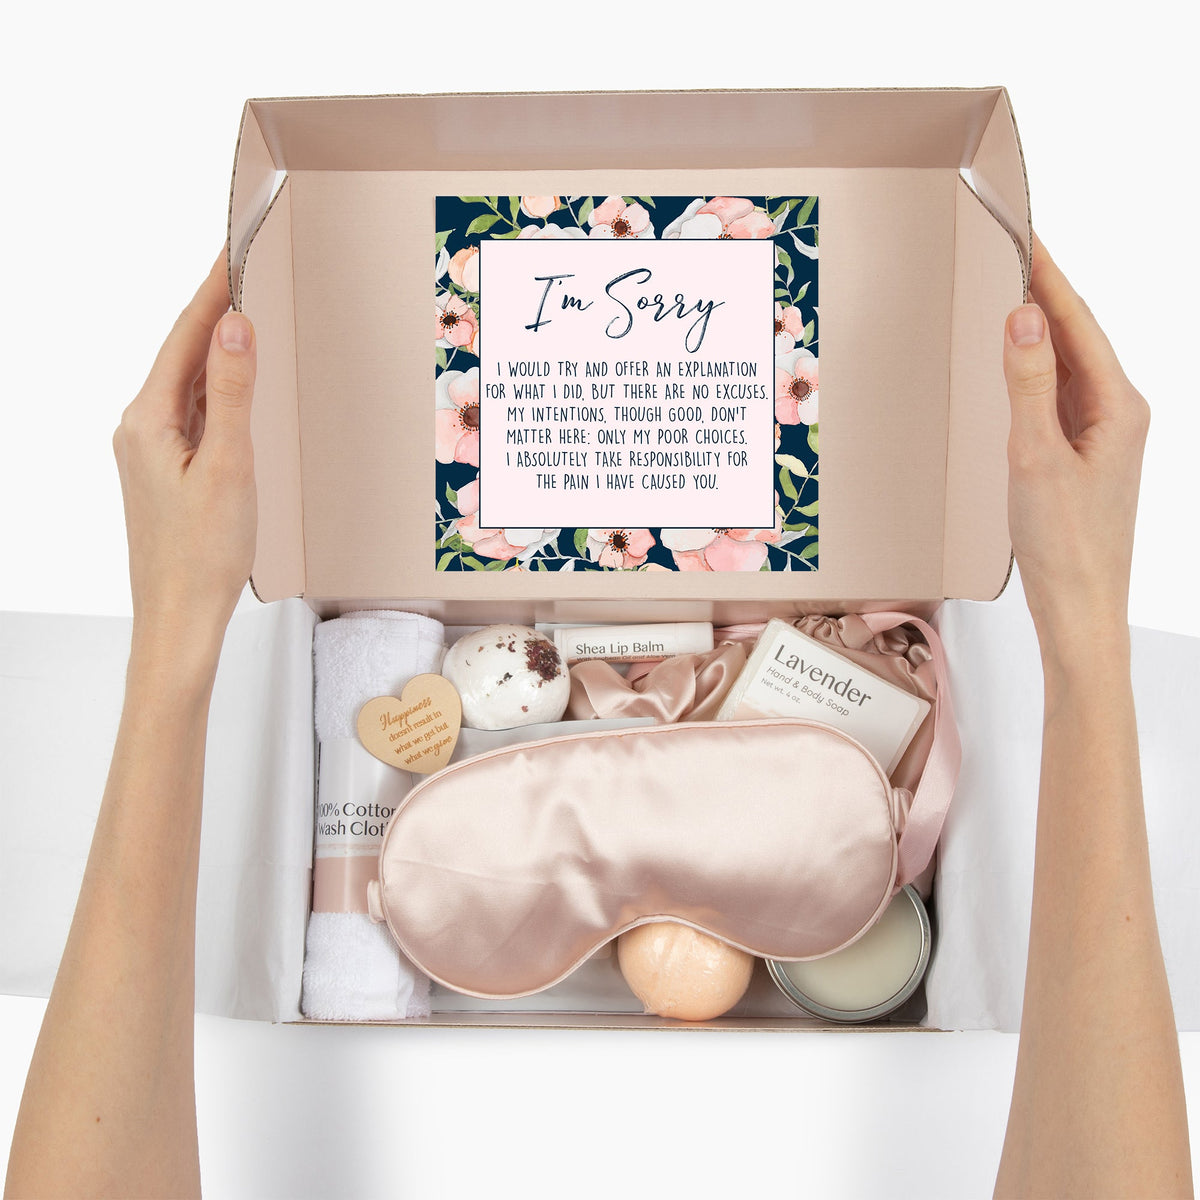 Get Well Soon - Self-Care Luxury Spa Gift Box